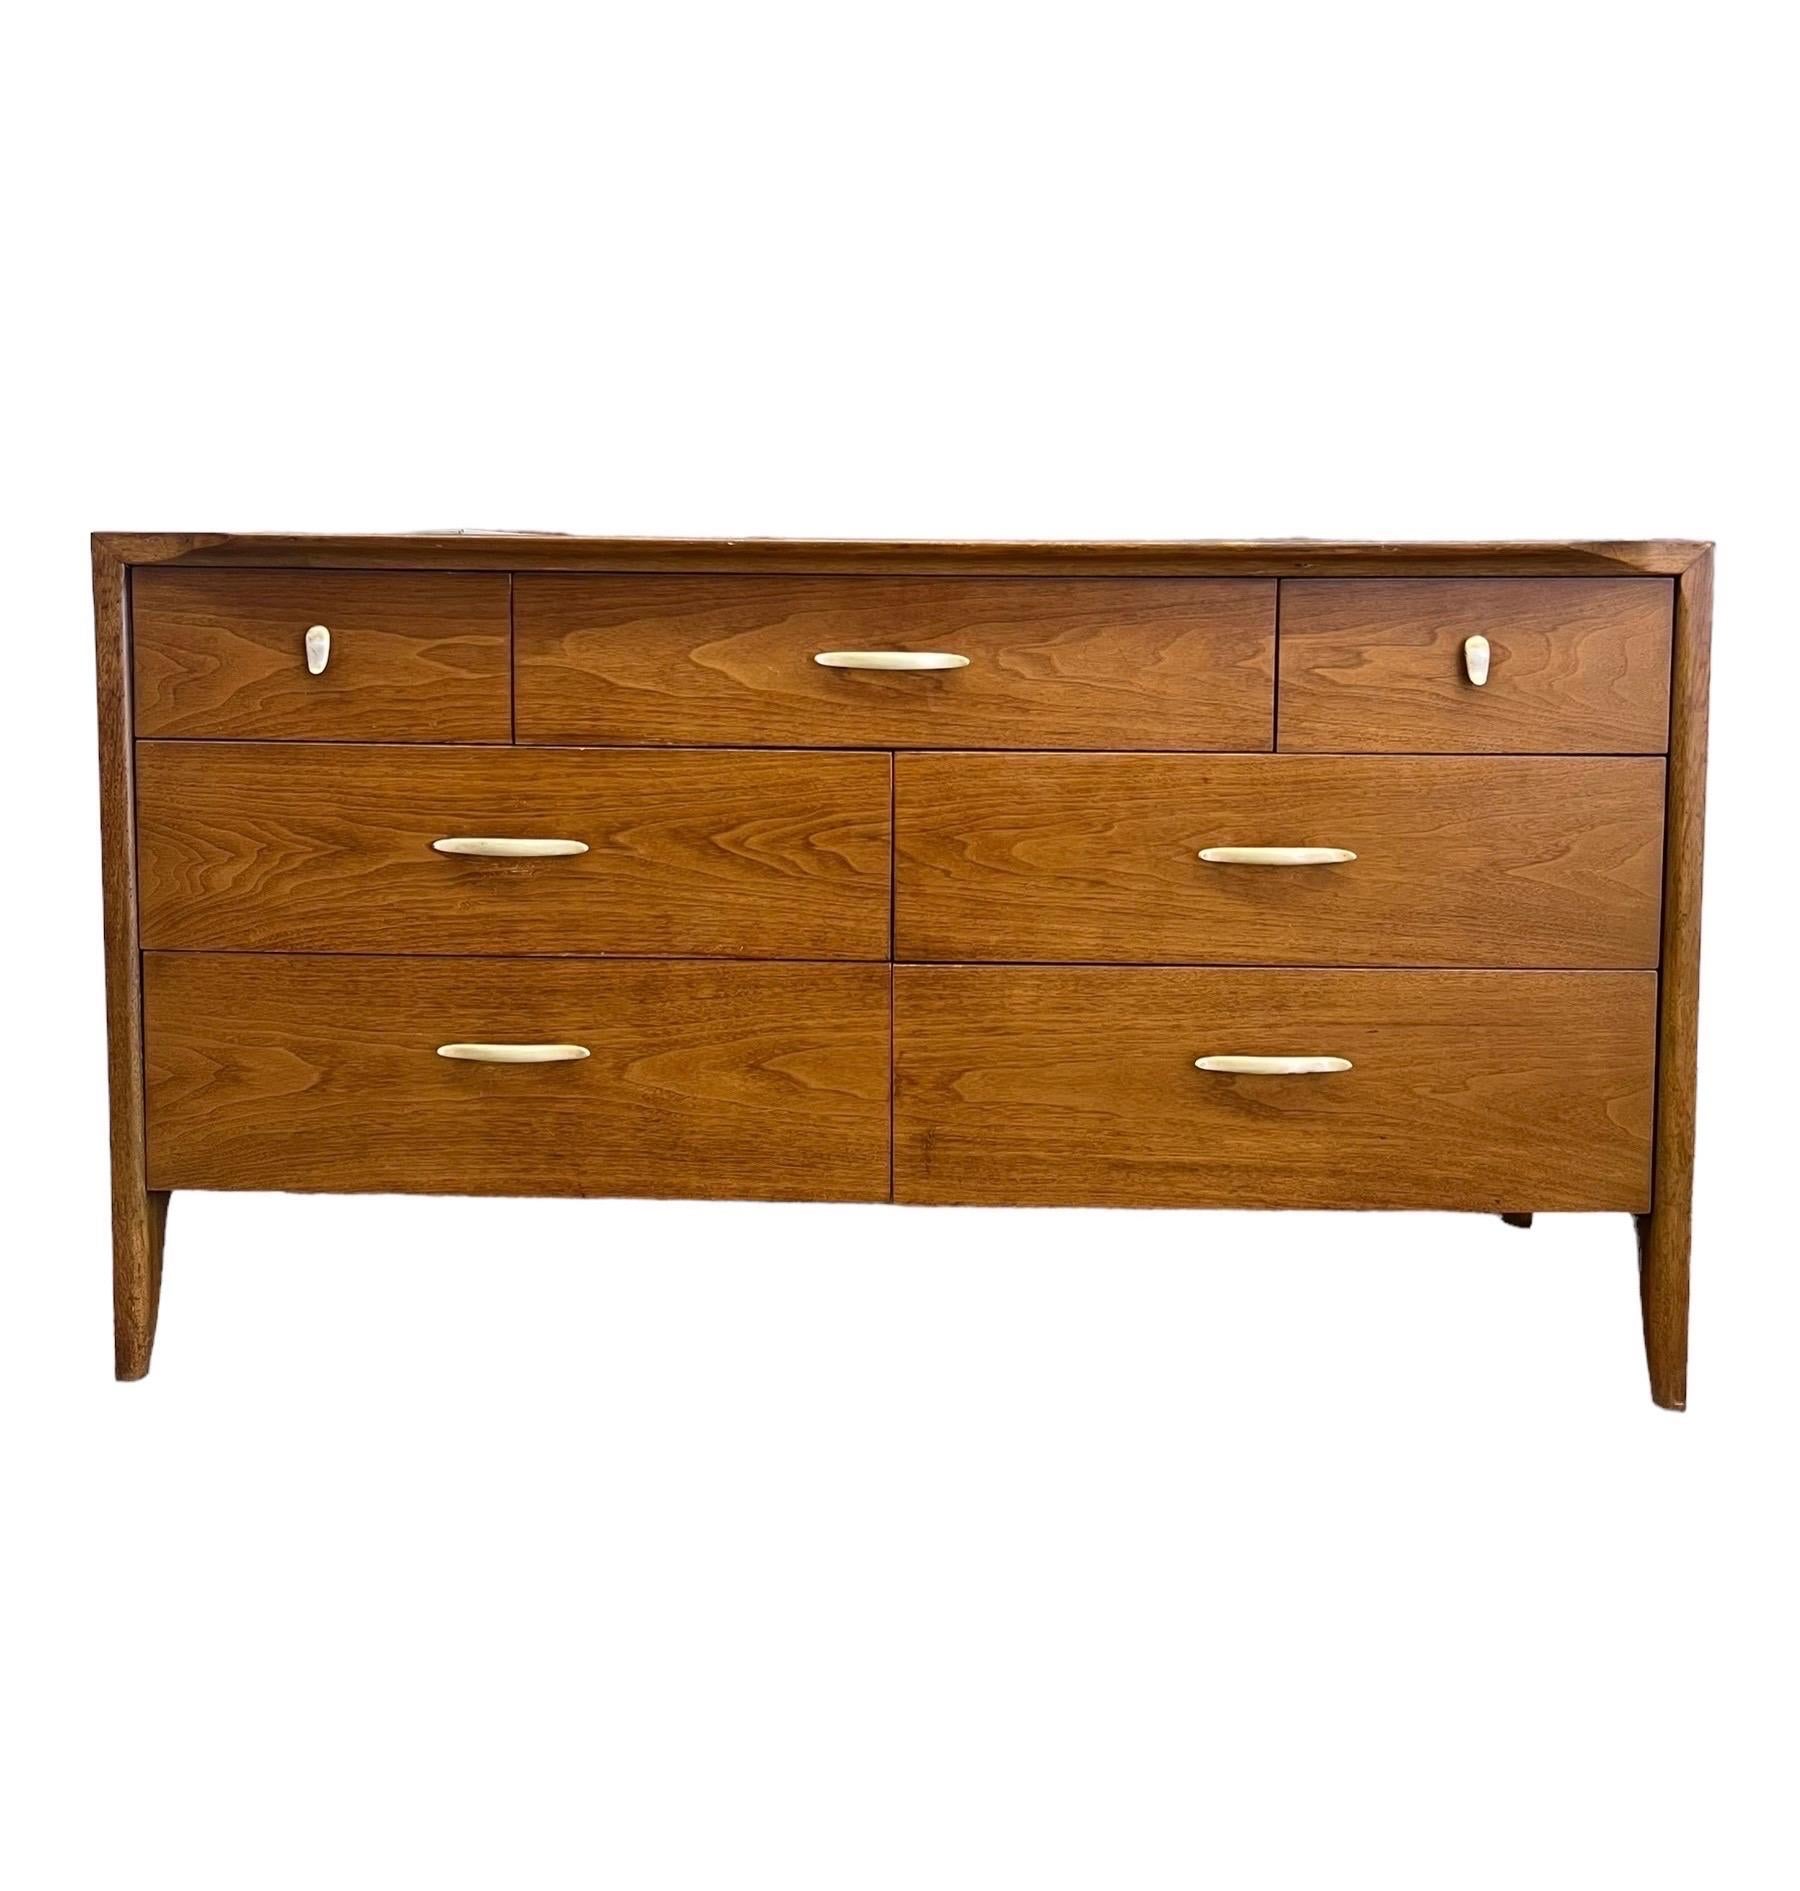 A stylish Mid-Century Modern seven-drawer dresser or credenza by John Van Koert for the 